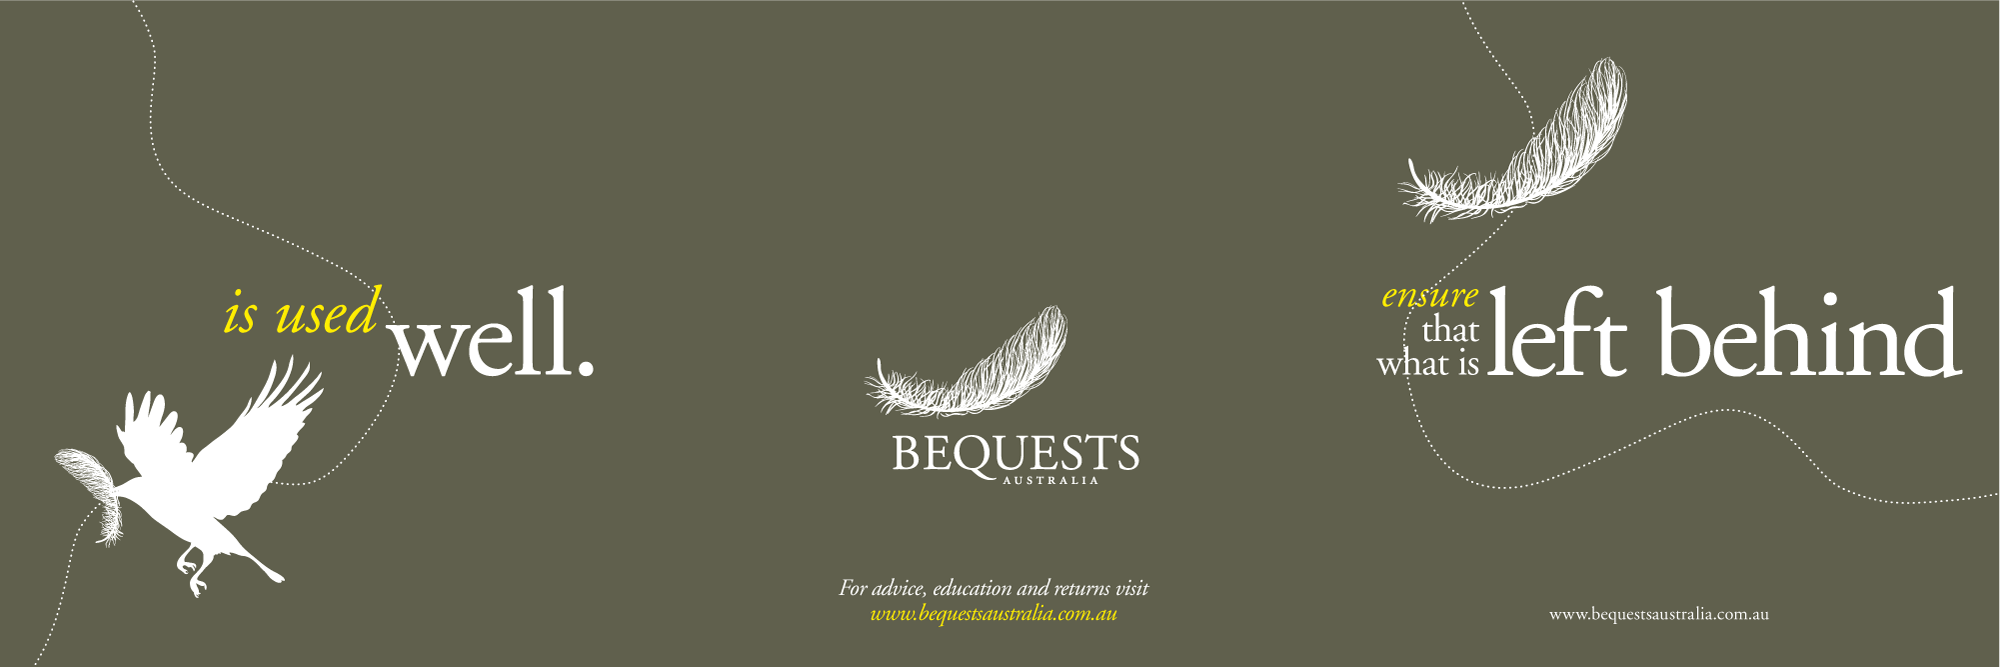 Bequests Australia Brochure design